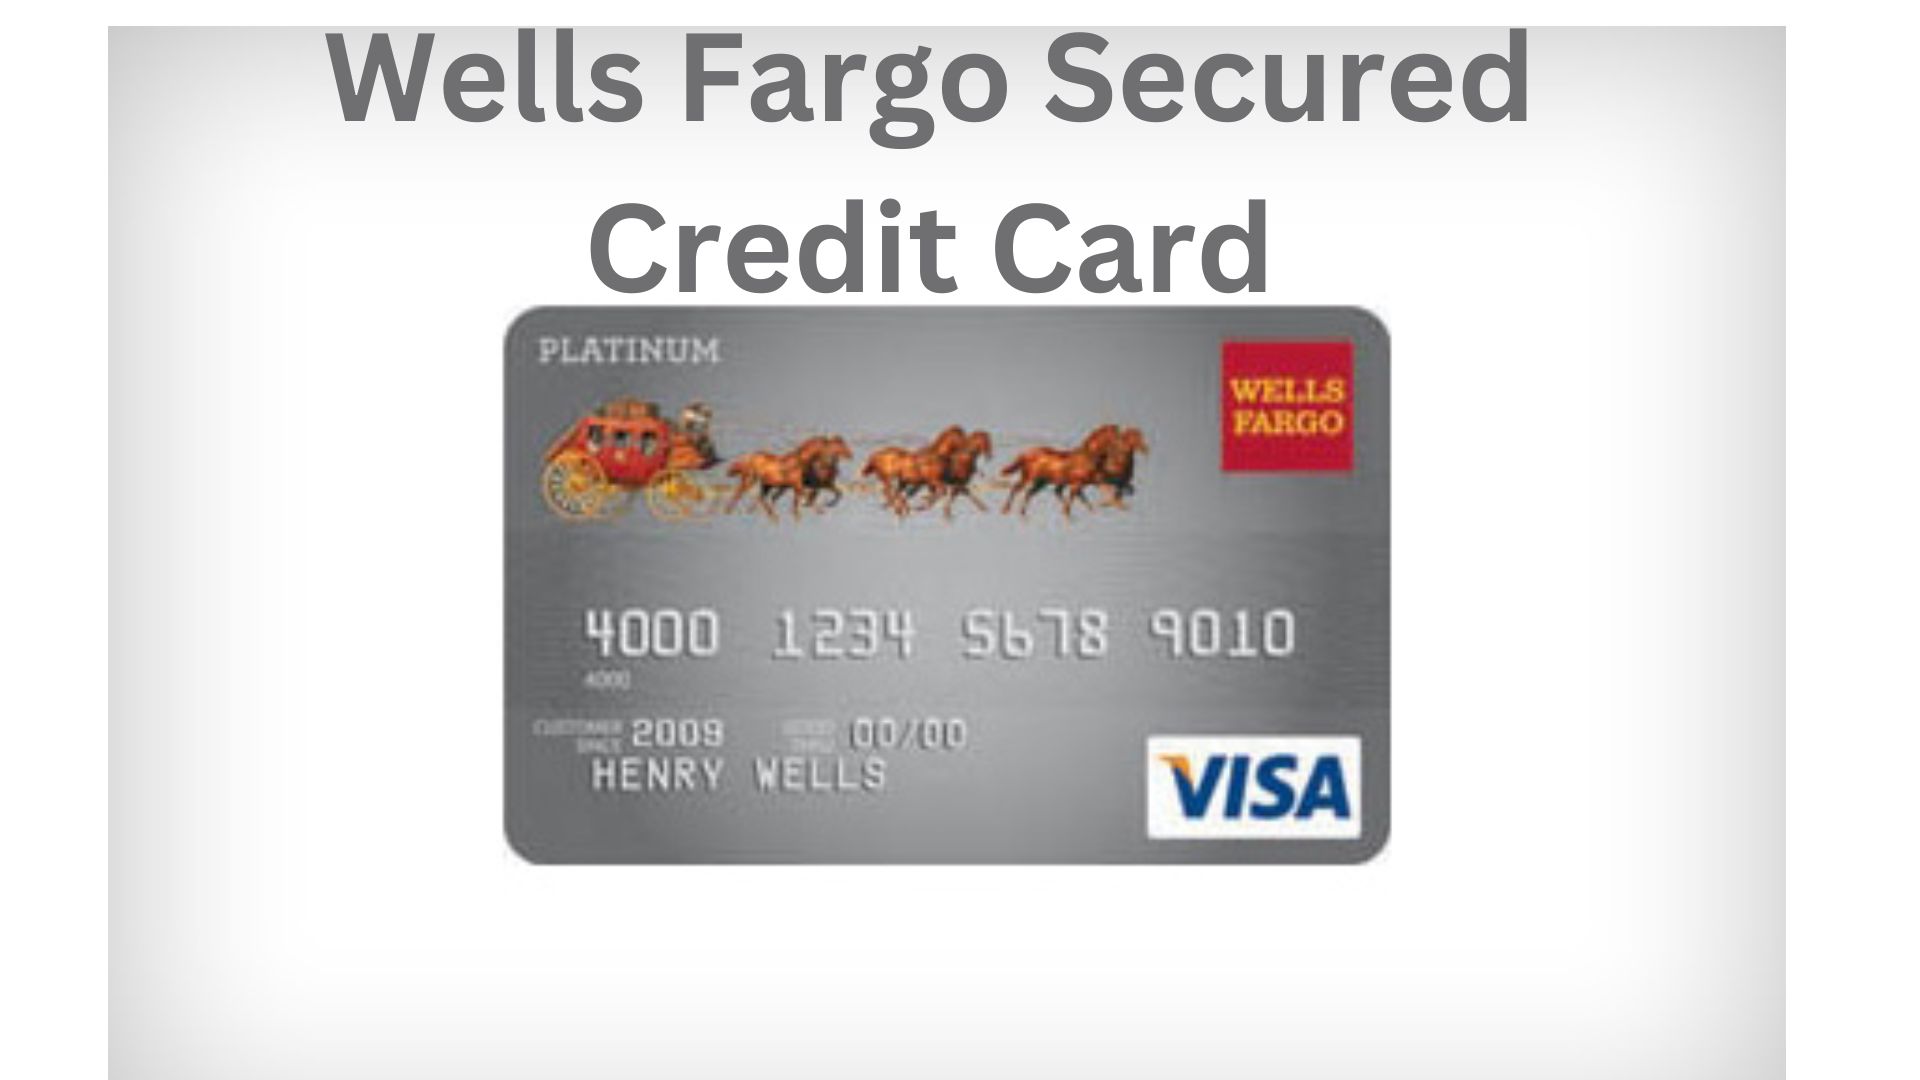 When Will Wells Fargo Upgrade My Secured Card?